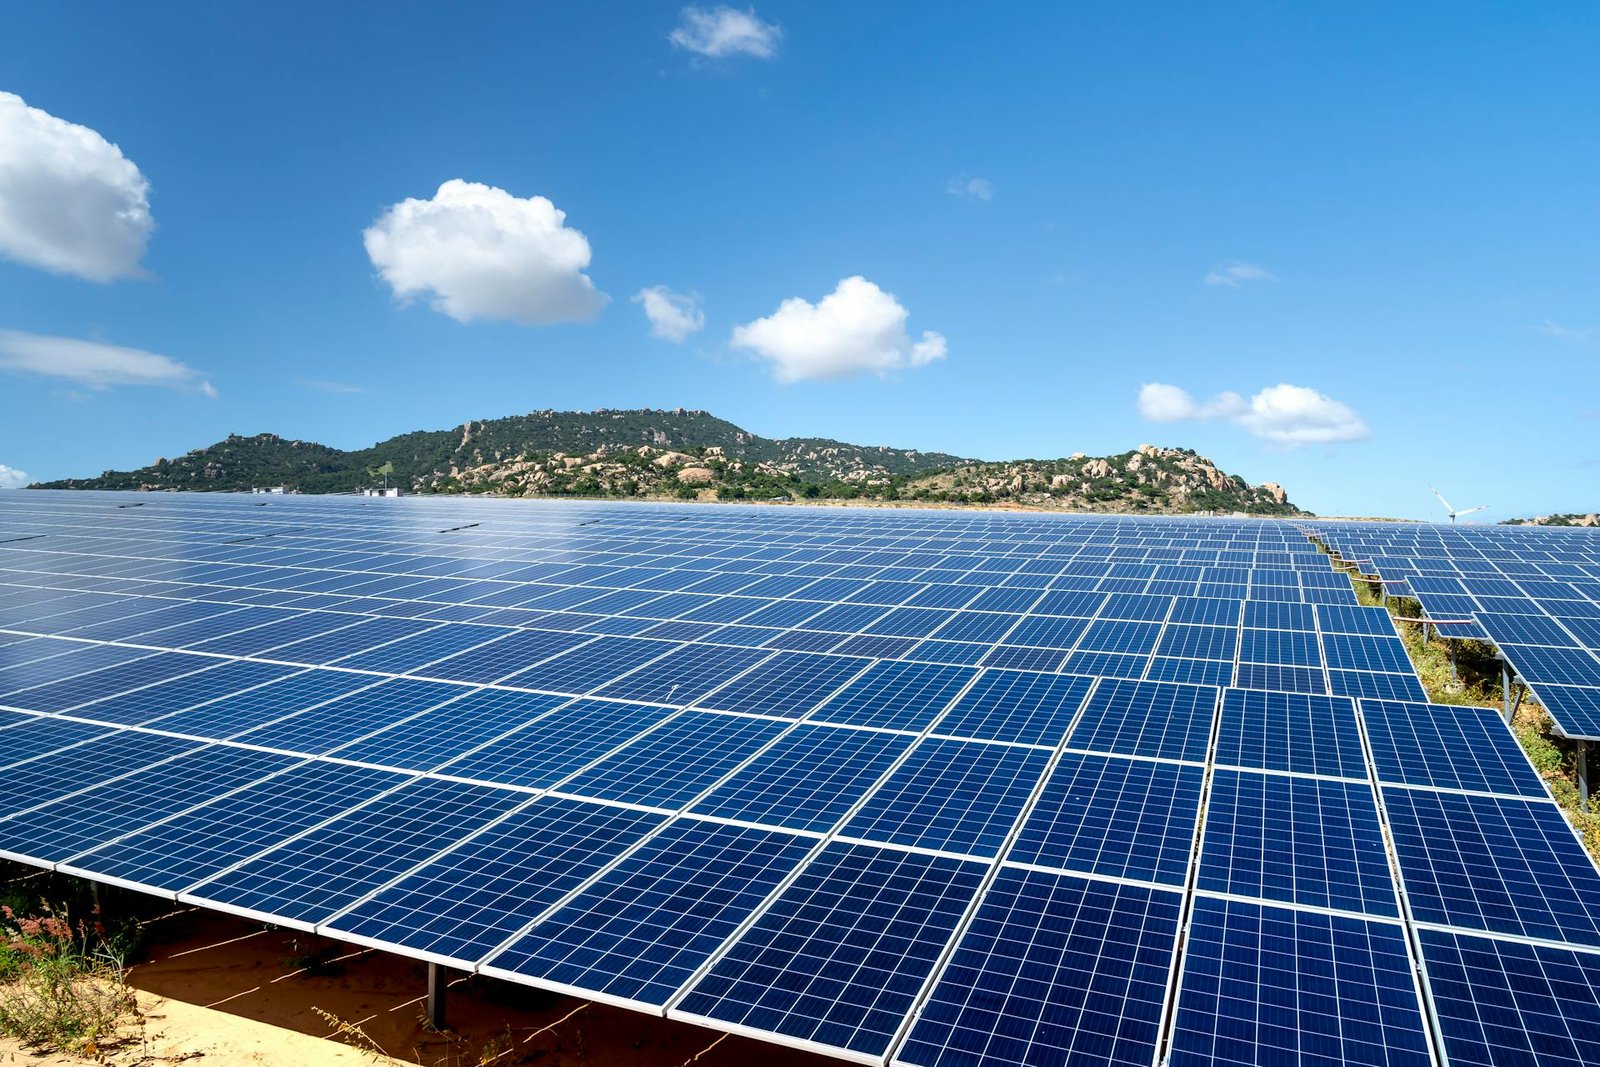 solar panels generating solar energy in sunlight